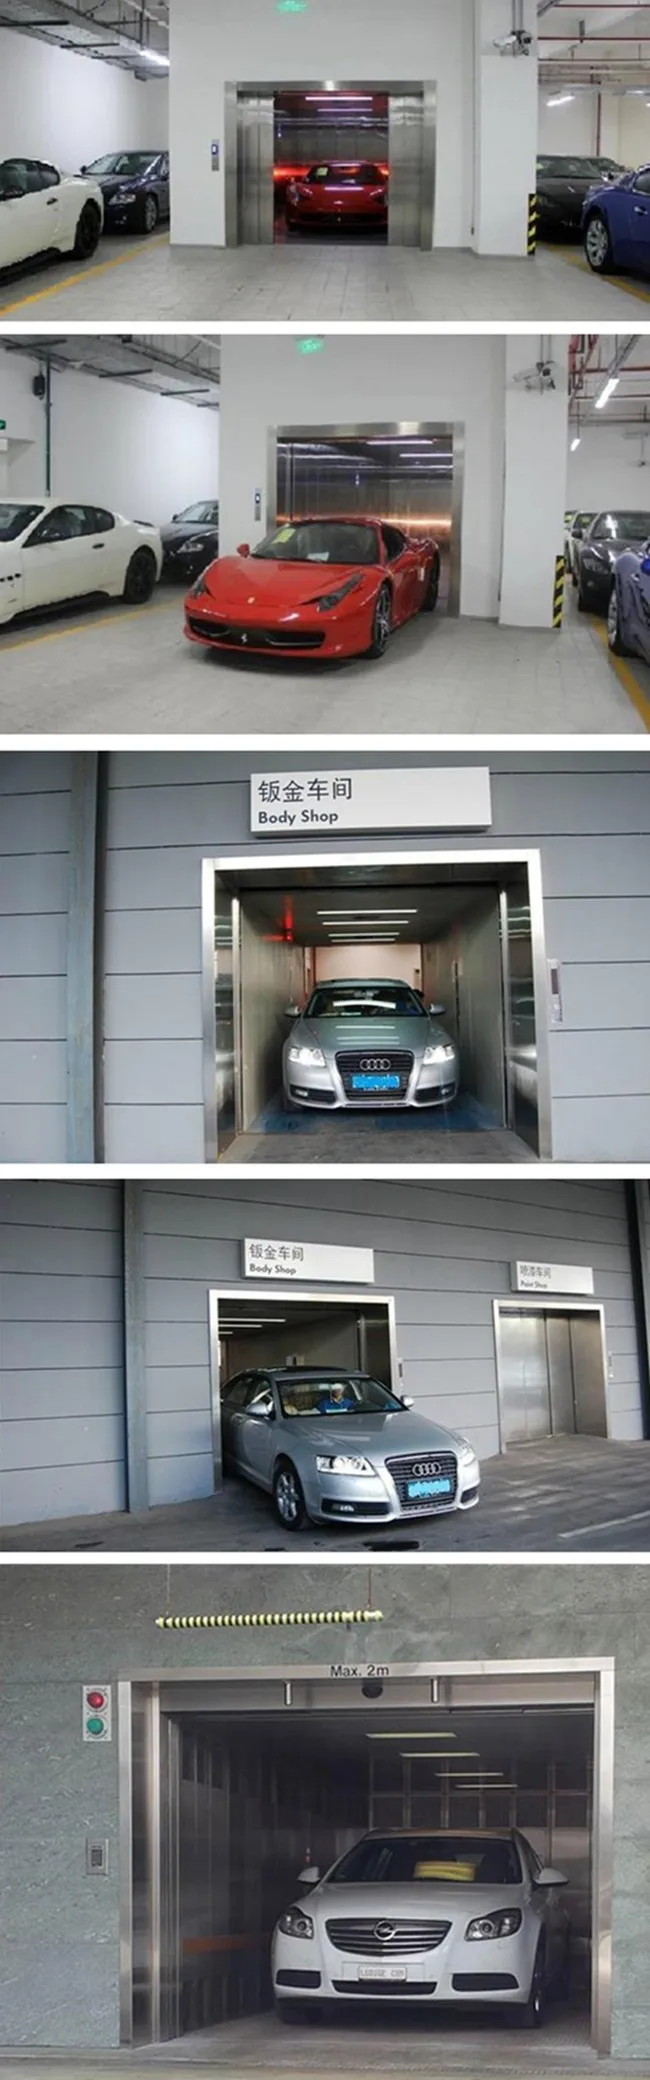 Deao低コストカーリフト地下ガレージパーキングカーエレベーター Buy ガレージカーエレベーター 車エレベーターコスト 駐車場の車エレベーター Product On Alibaba Com